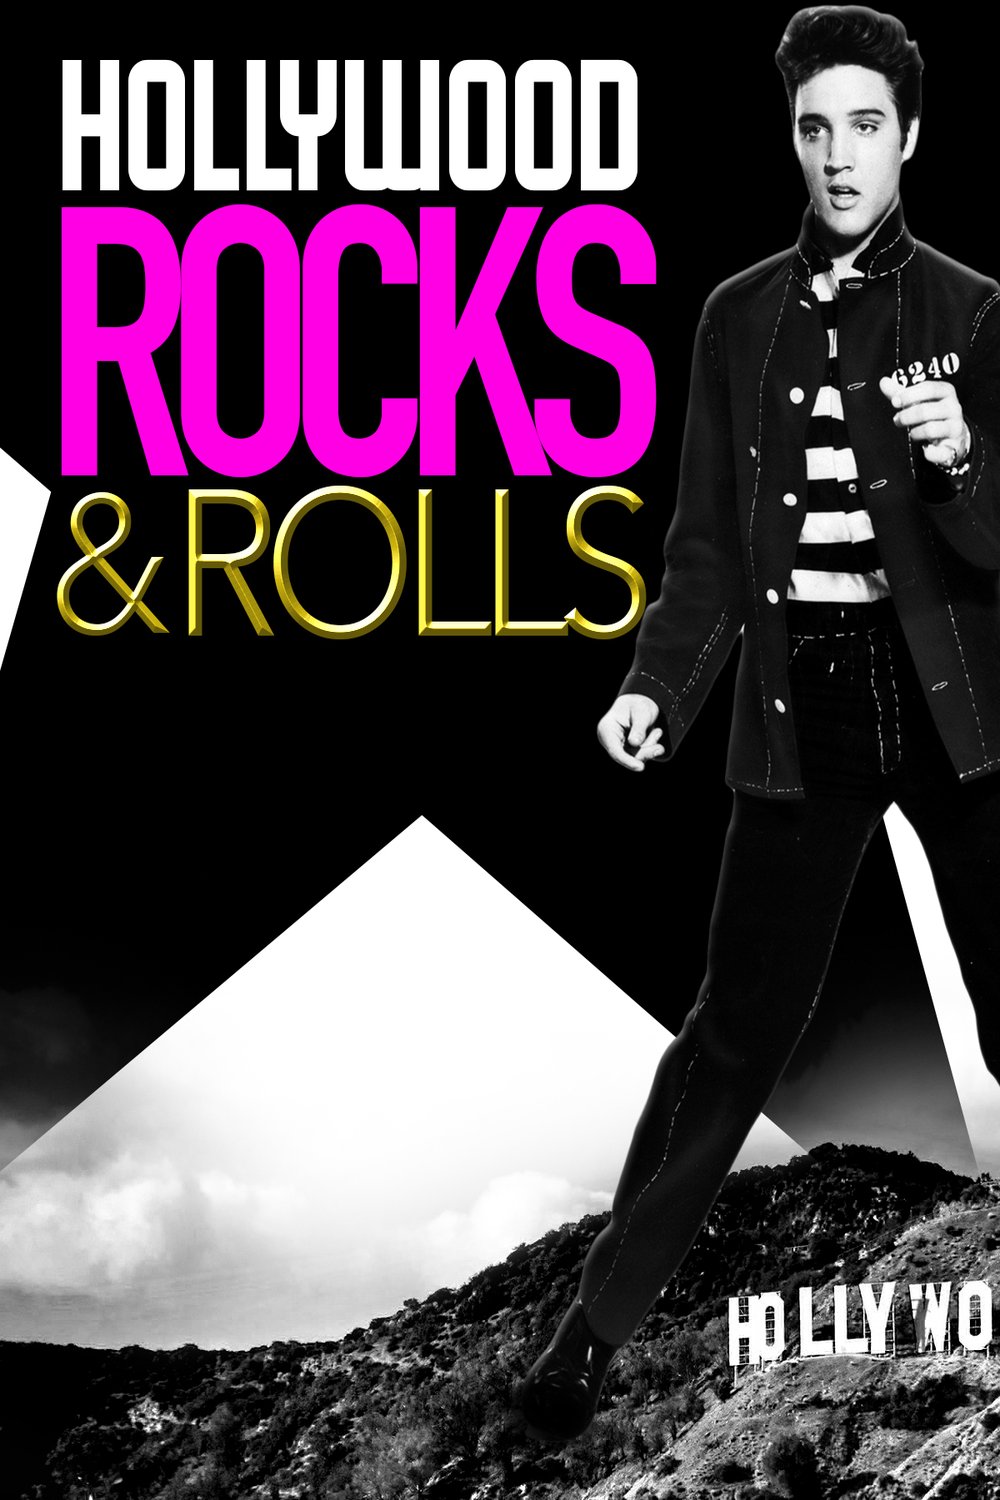 L'affiche du film Hollywood Rocks 'n' Rolls in the '50s